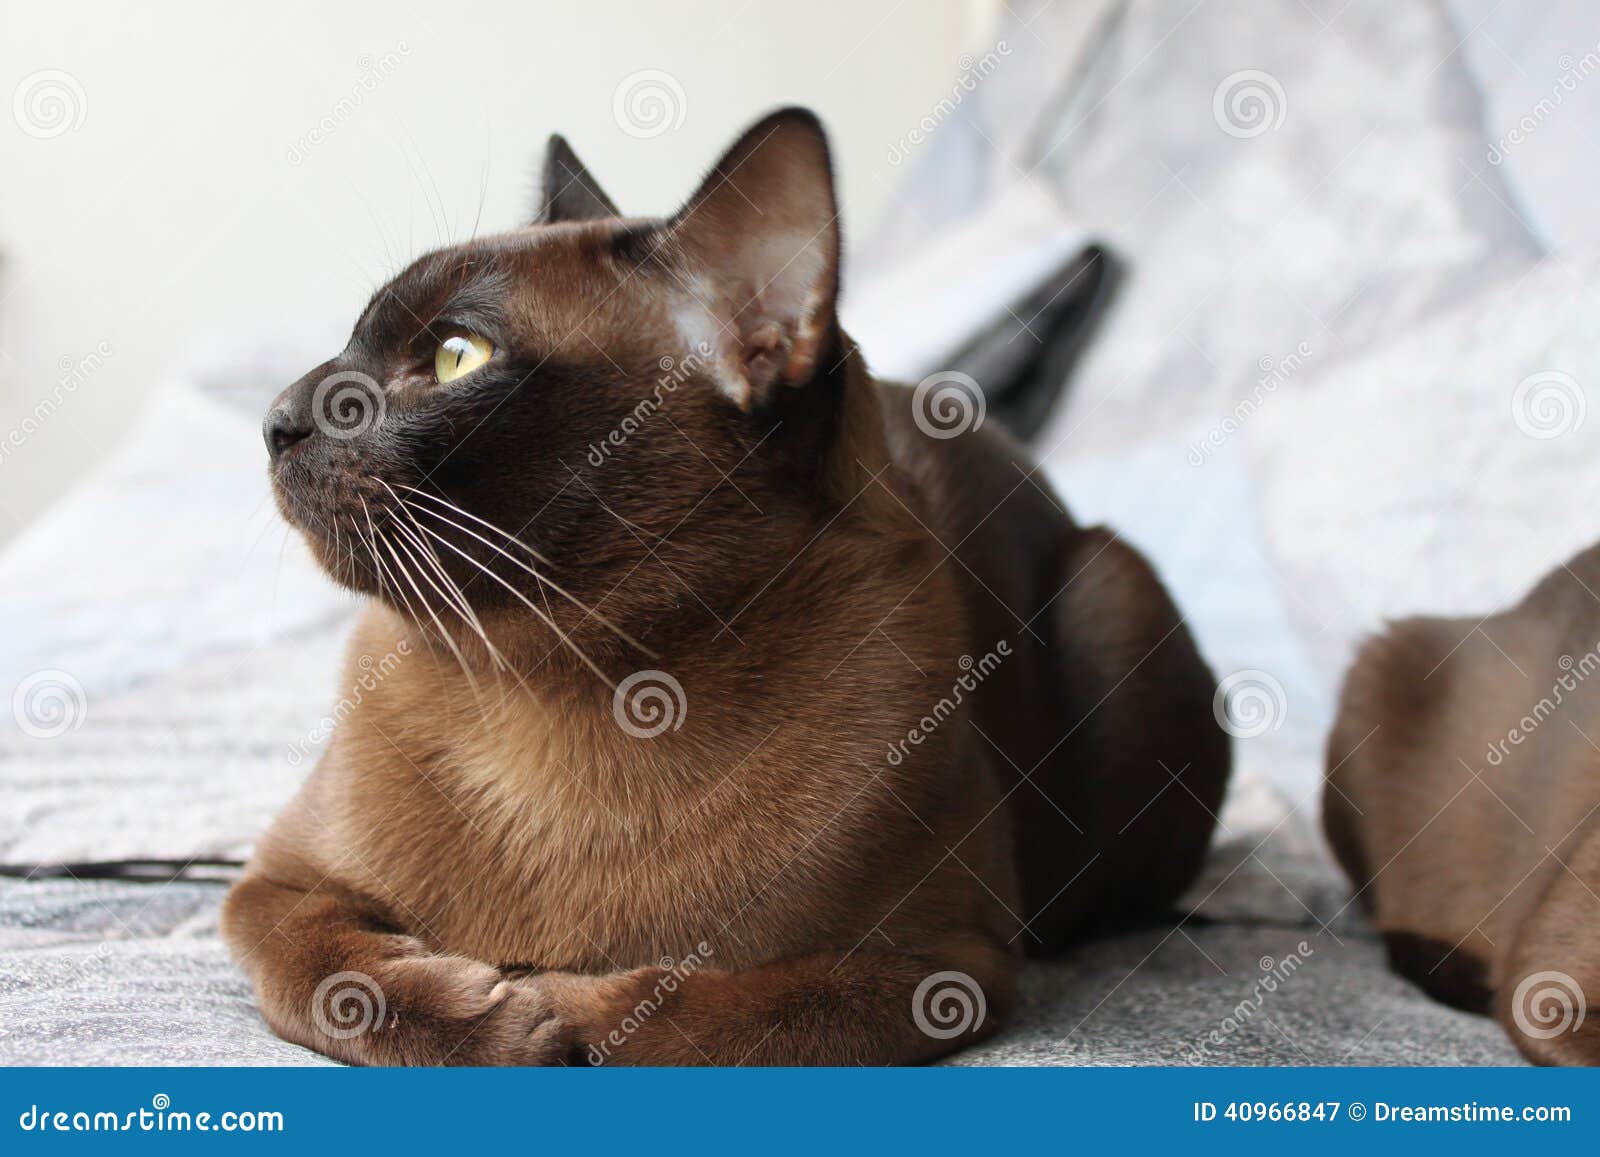 Burma Cat stock image. Image of cats, young, kissa, kitti - 40966847